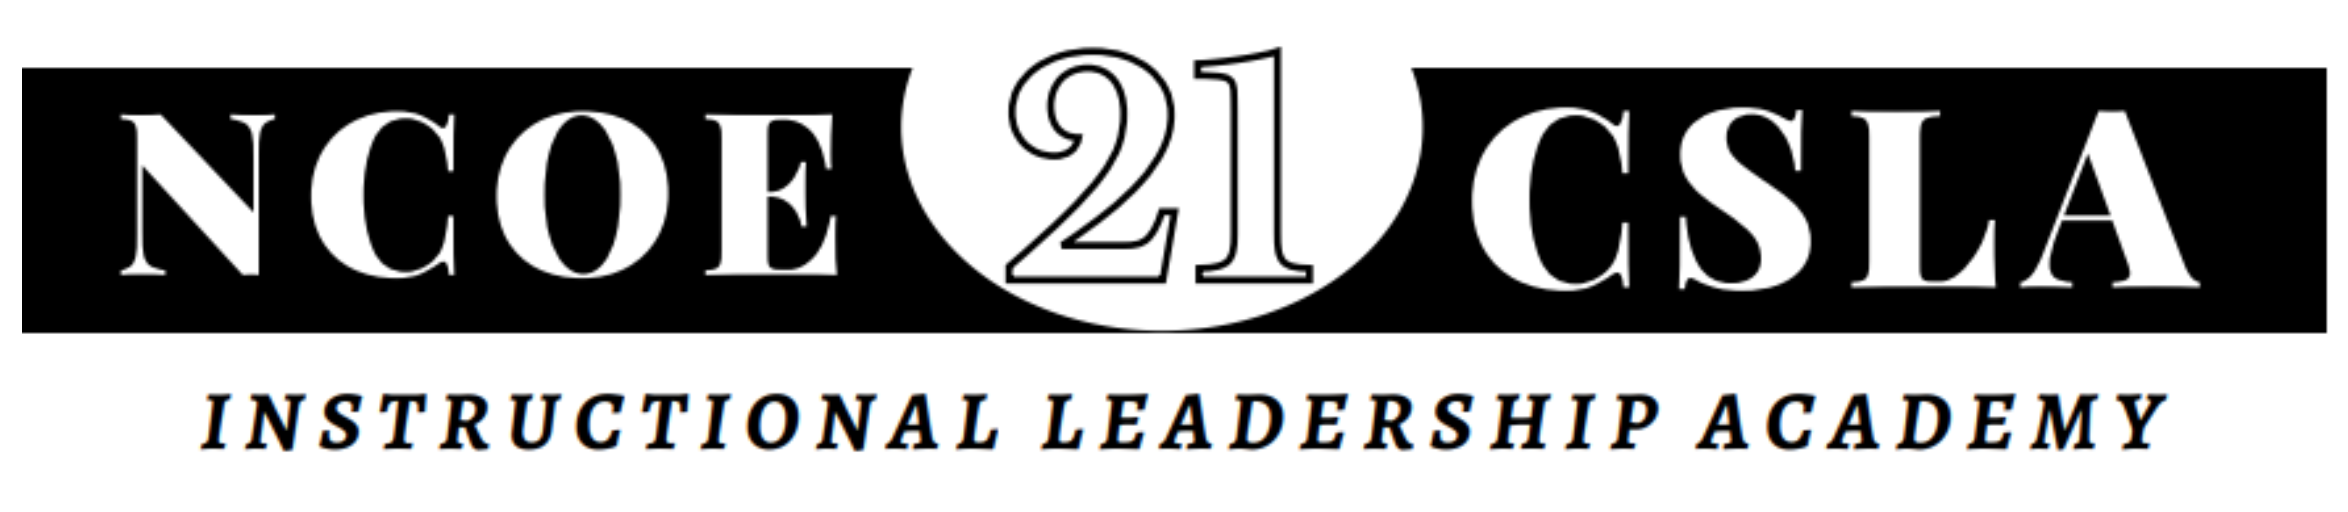 NCOE 21 CSLA Instructional Leadership Academy